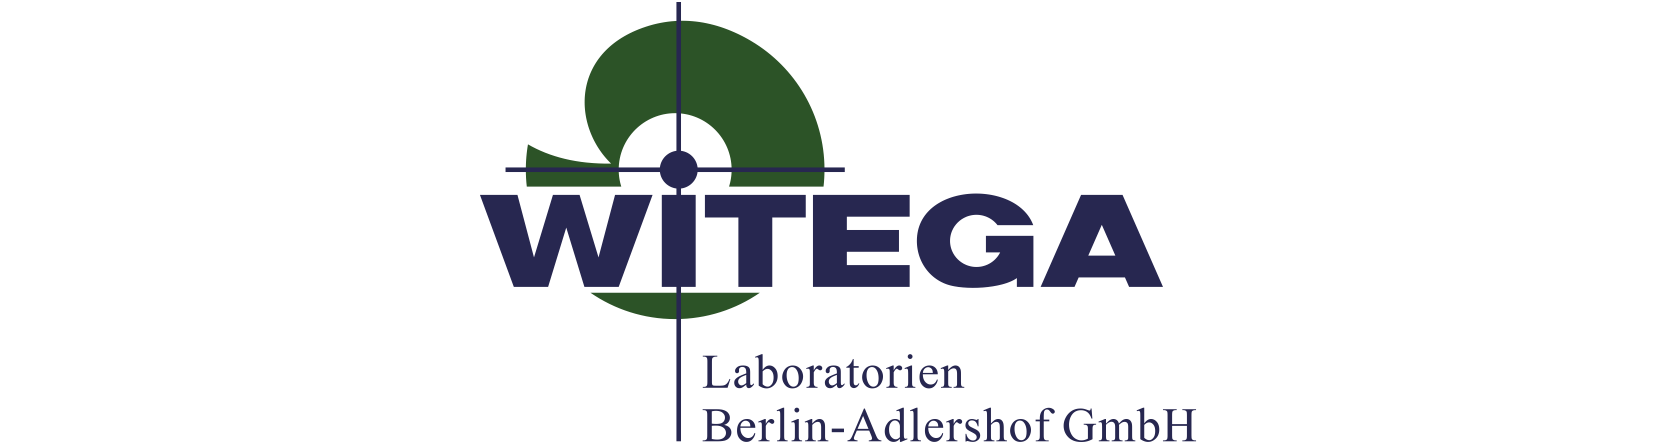 WITEGA Laboratorien Berlin-Adlershof GmbH